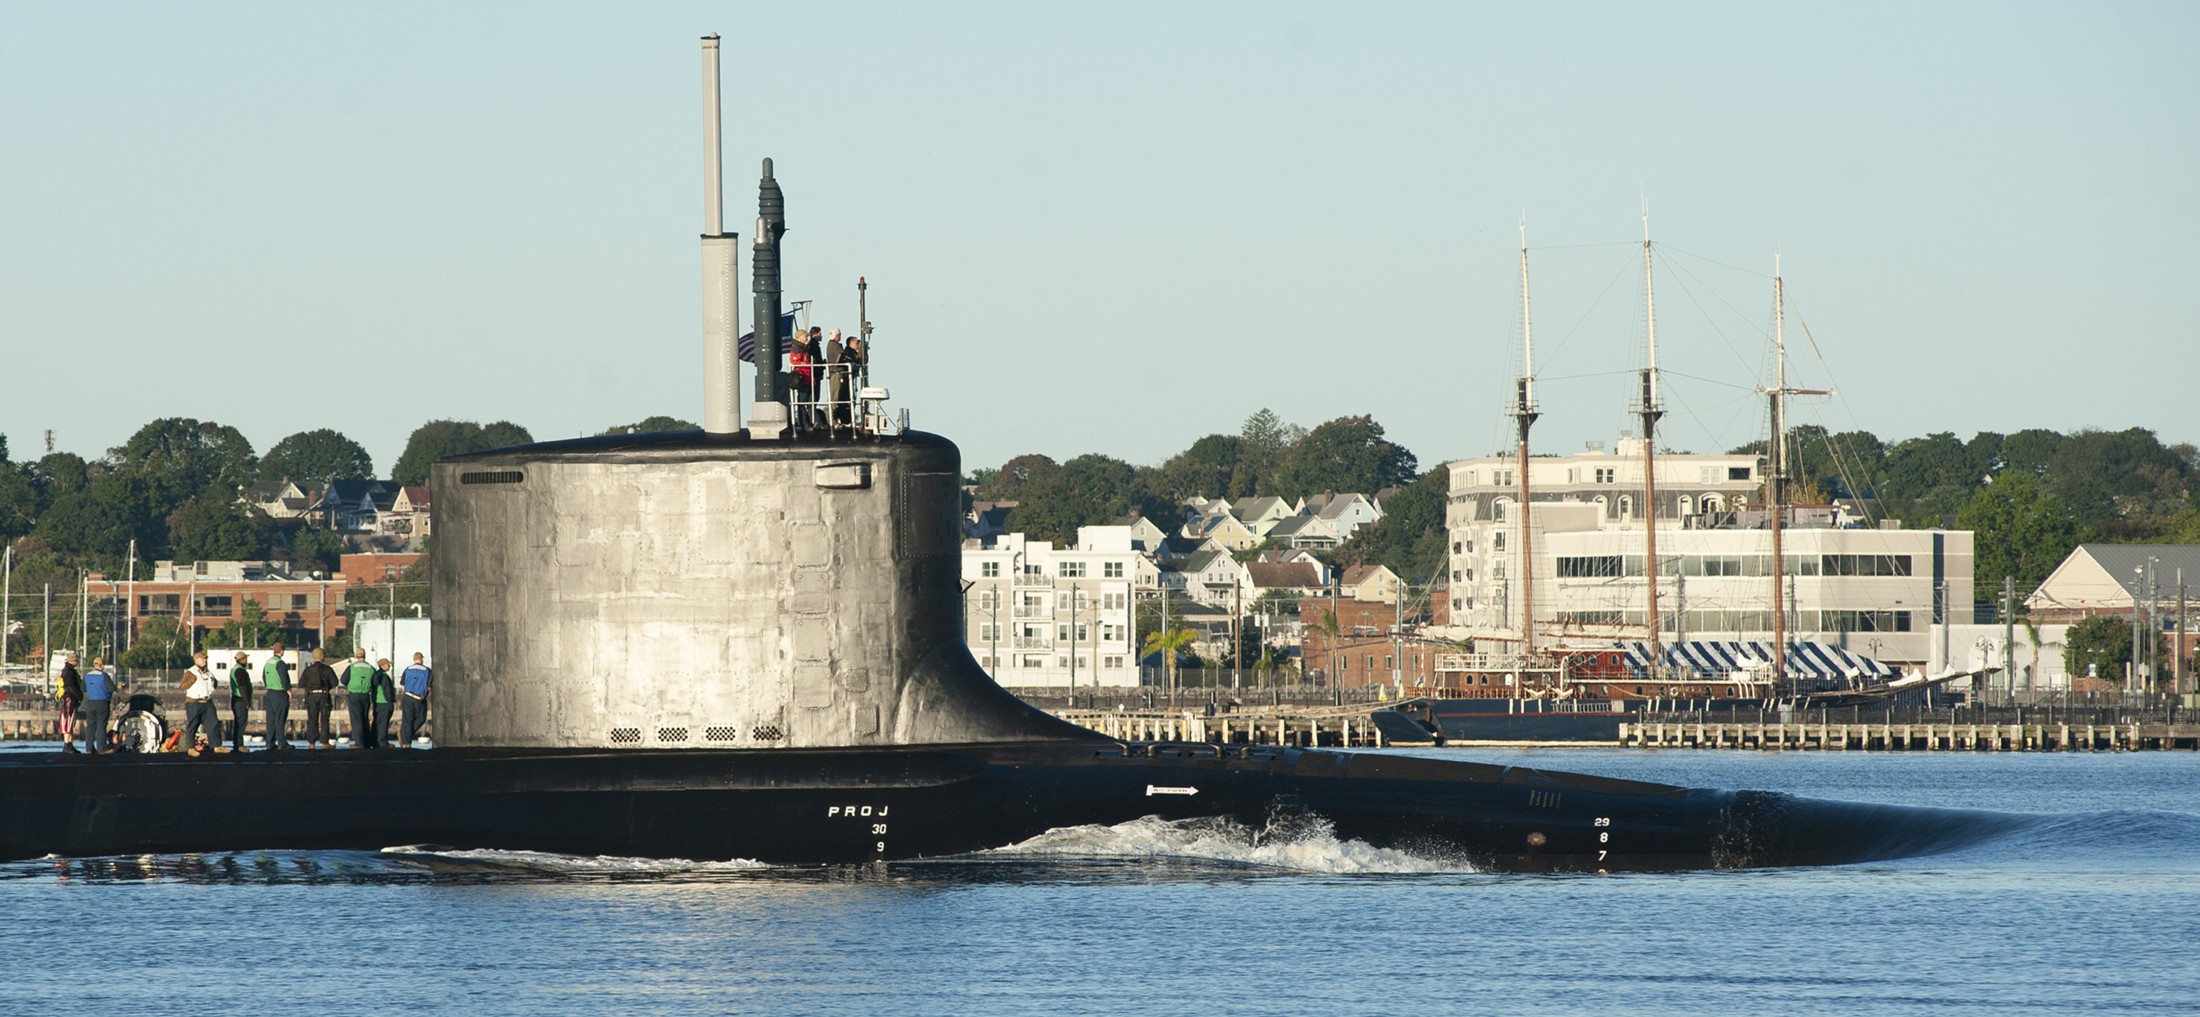 ssn-791 uss delaware virginia class attack submarine us navy 14 naval base new london groton connecticut